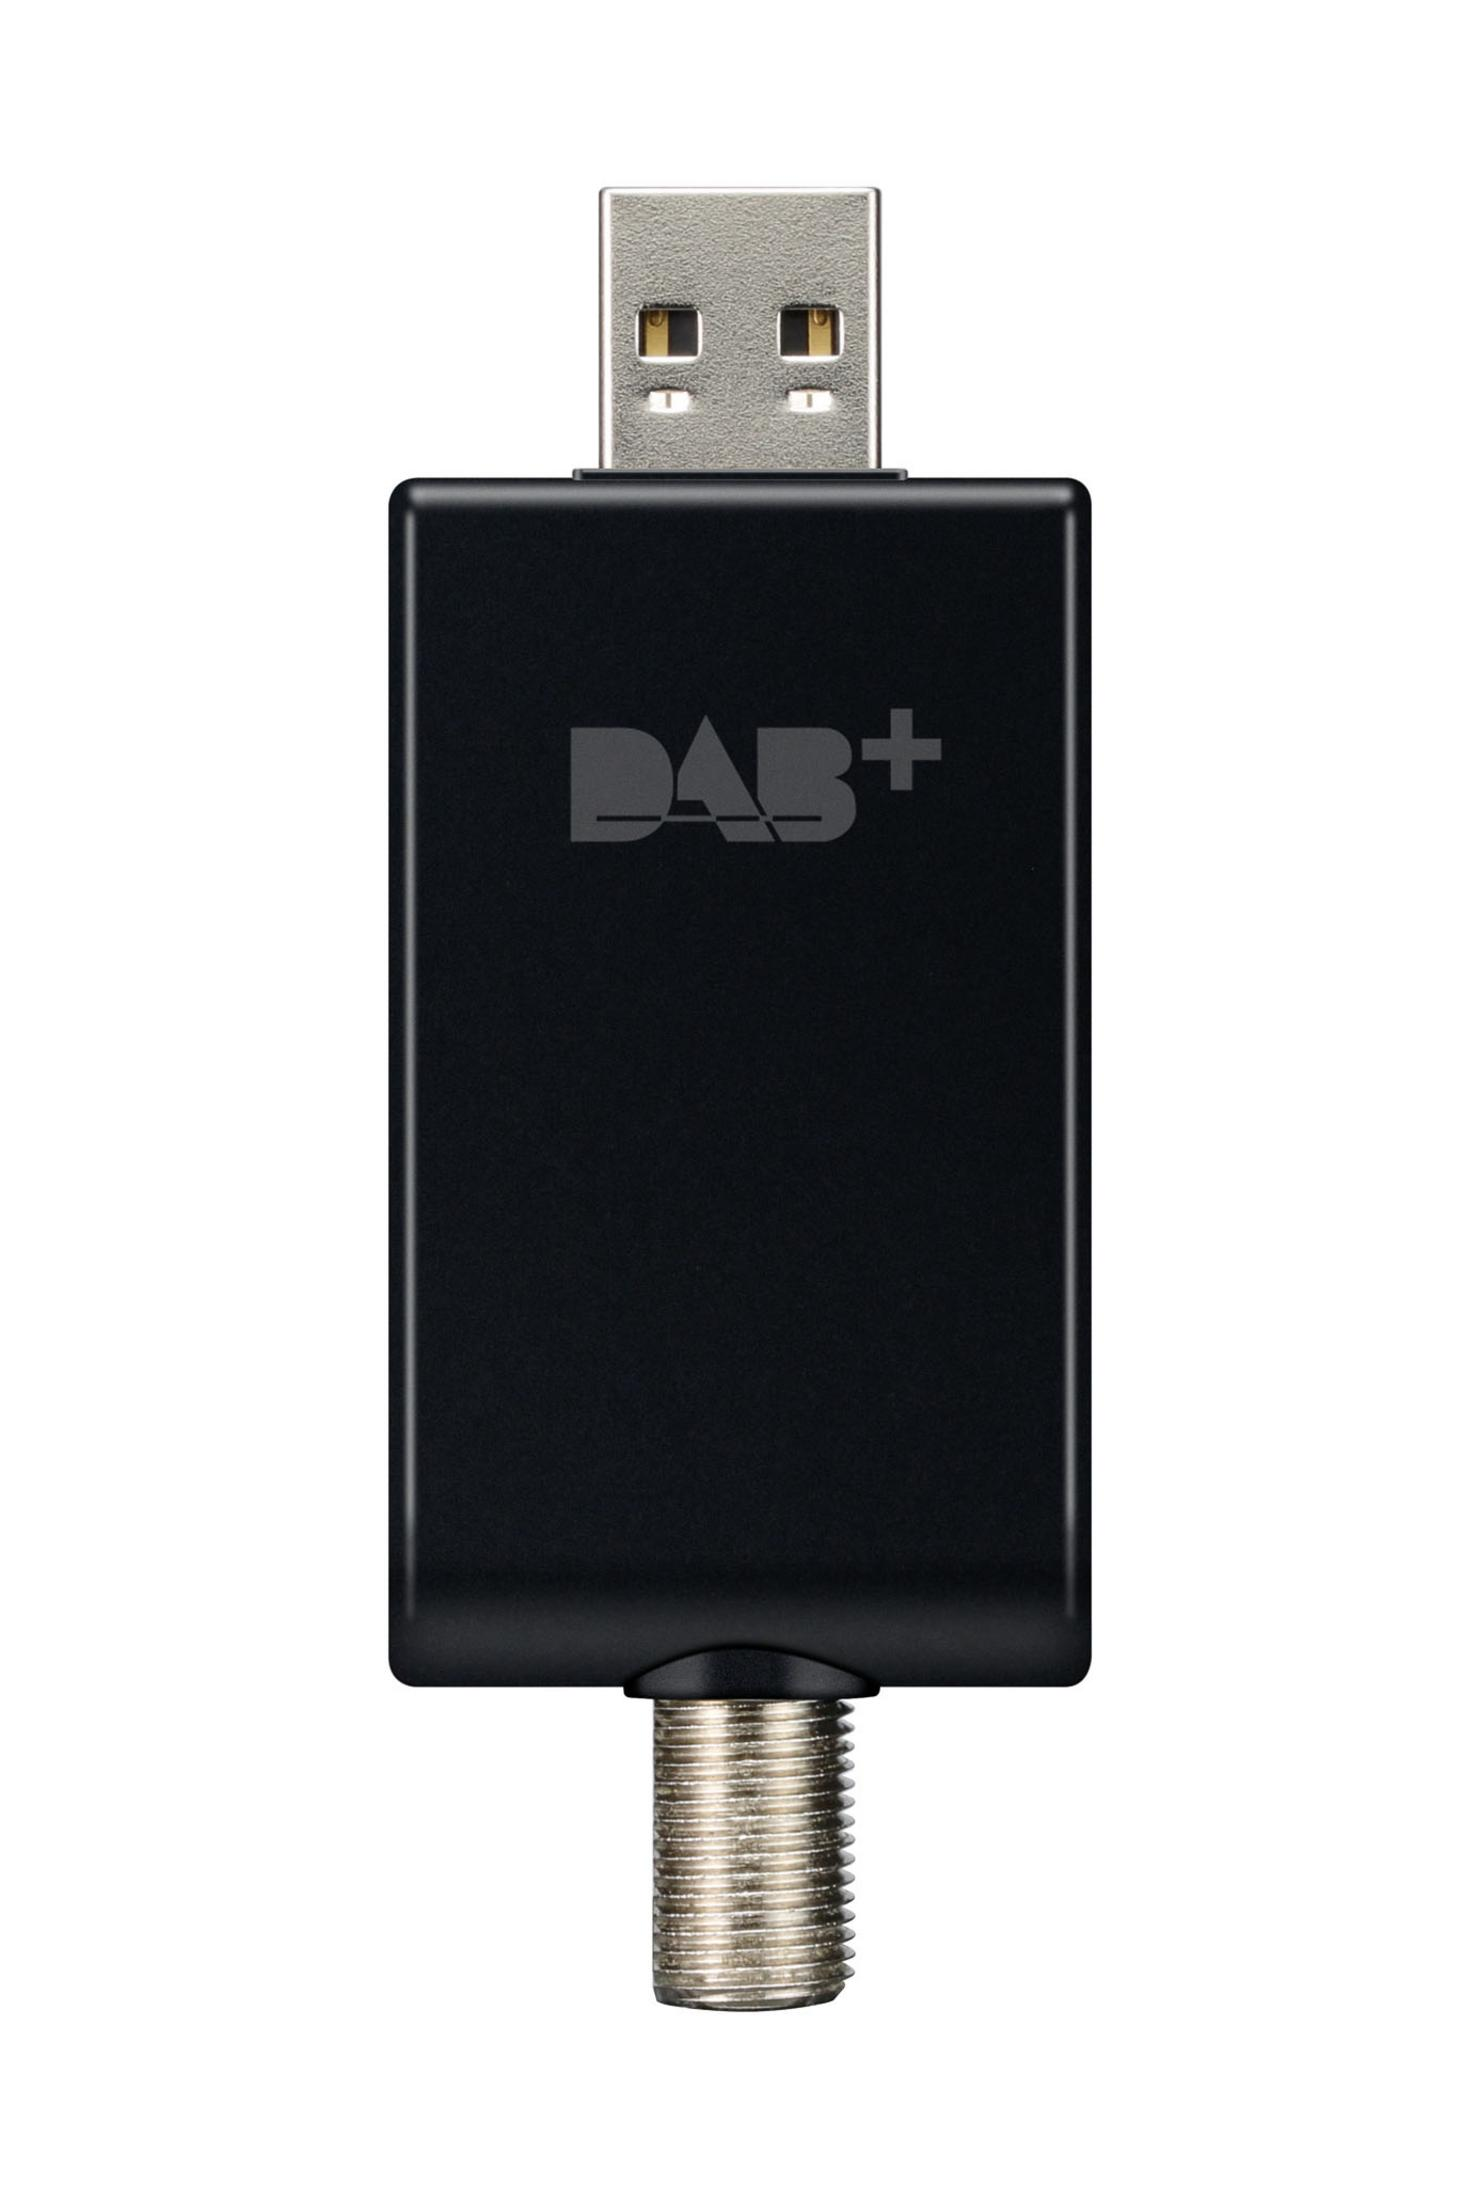 PIONEER AS-DB100(B) / DAB+ DAB/DAB+ ADAPTER USB-Stick, Schwarz